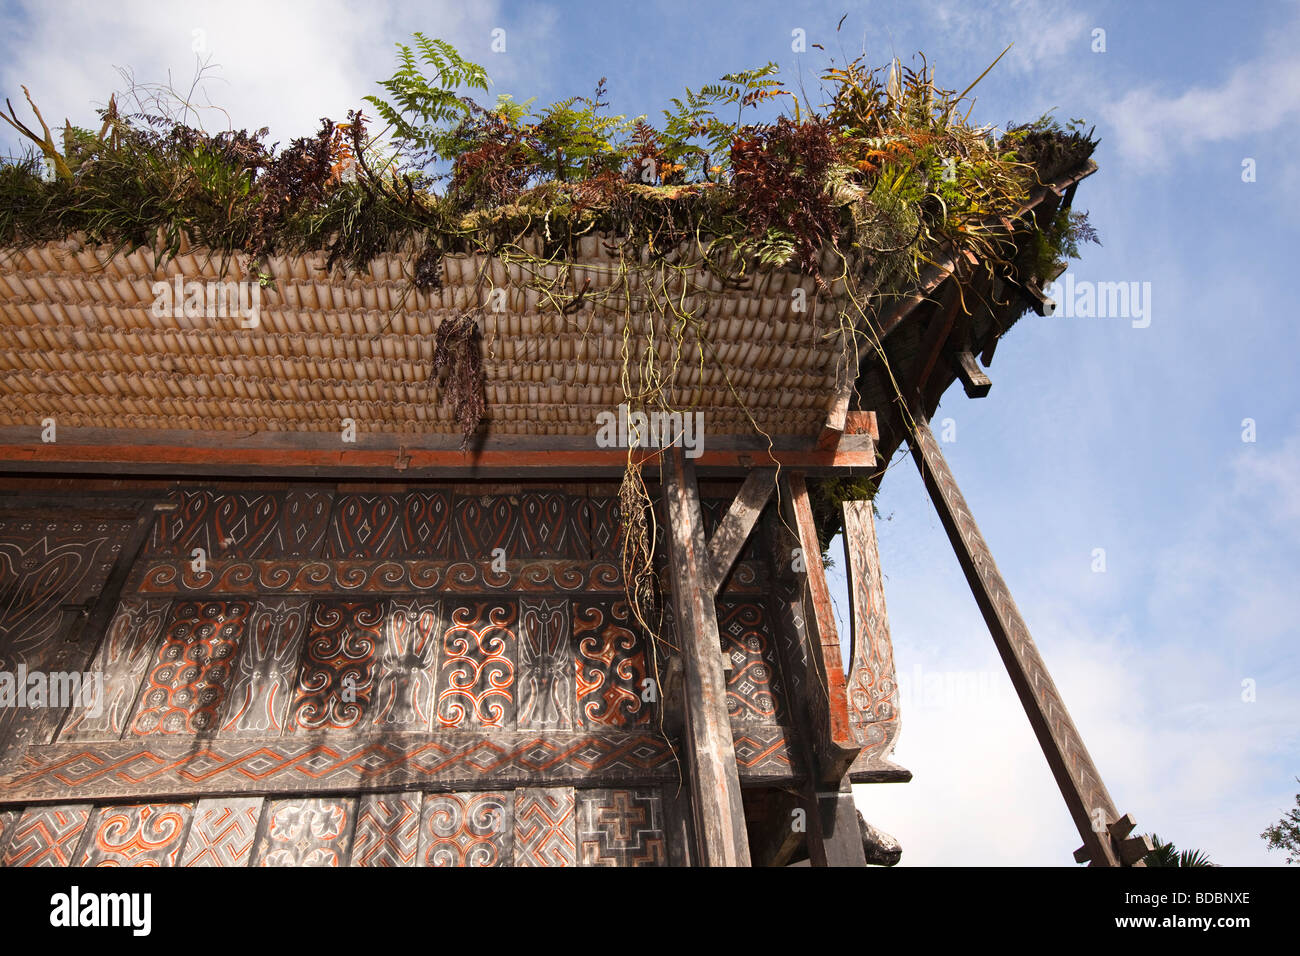 Indonesien Sulawesi Tana Toraja Lemo traditionelle Tongkonan Haus Dekoration Dach Konstruktionsdetail Stockfoto